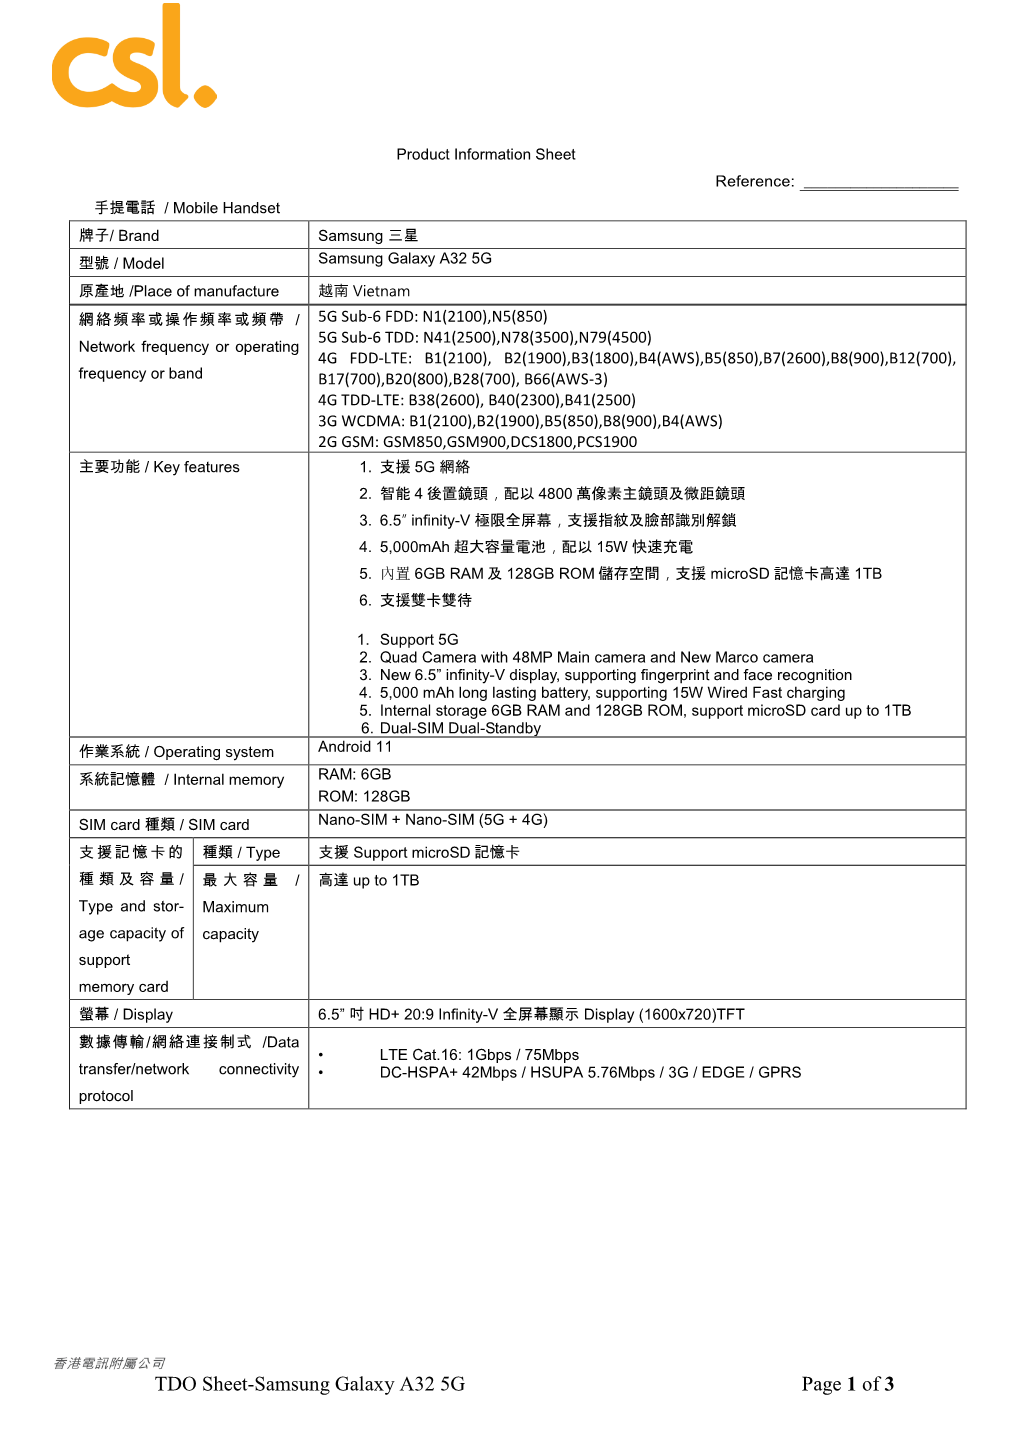 TDO Sheet-Samsung Galaxy A32 5G Page 1 of 3